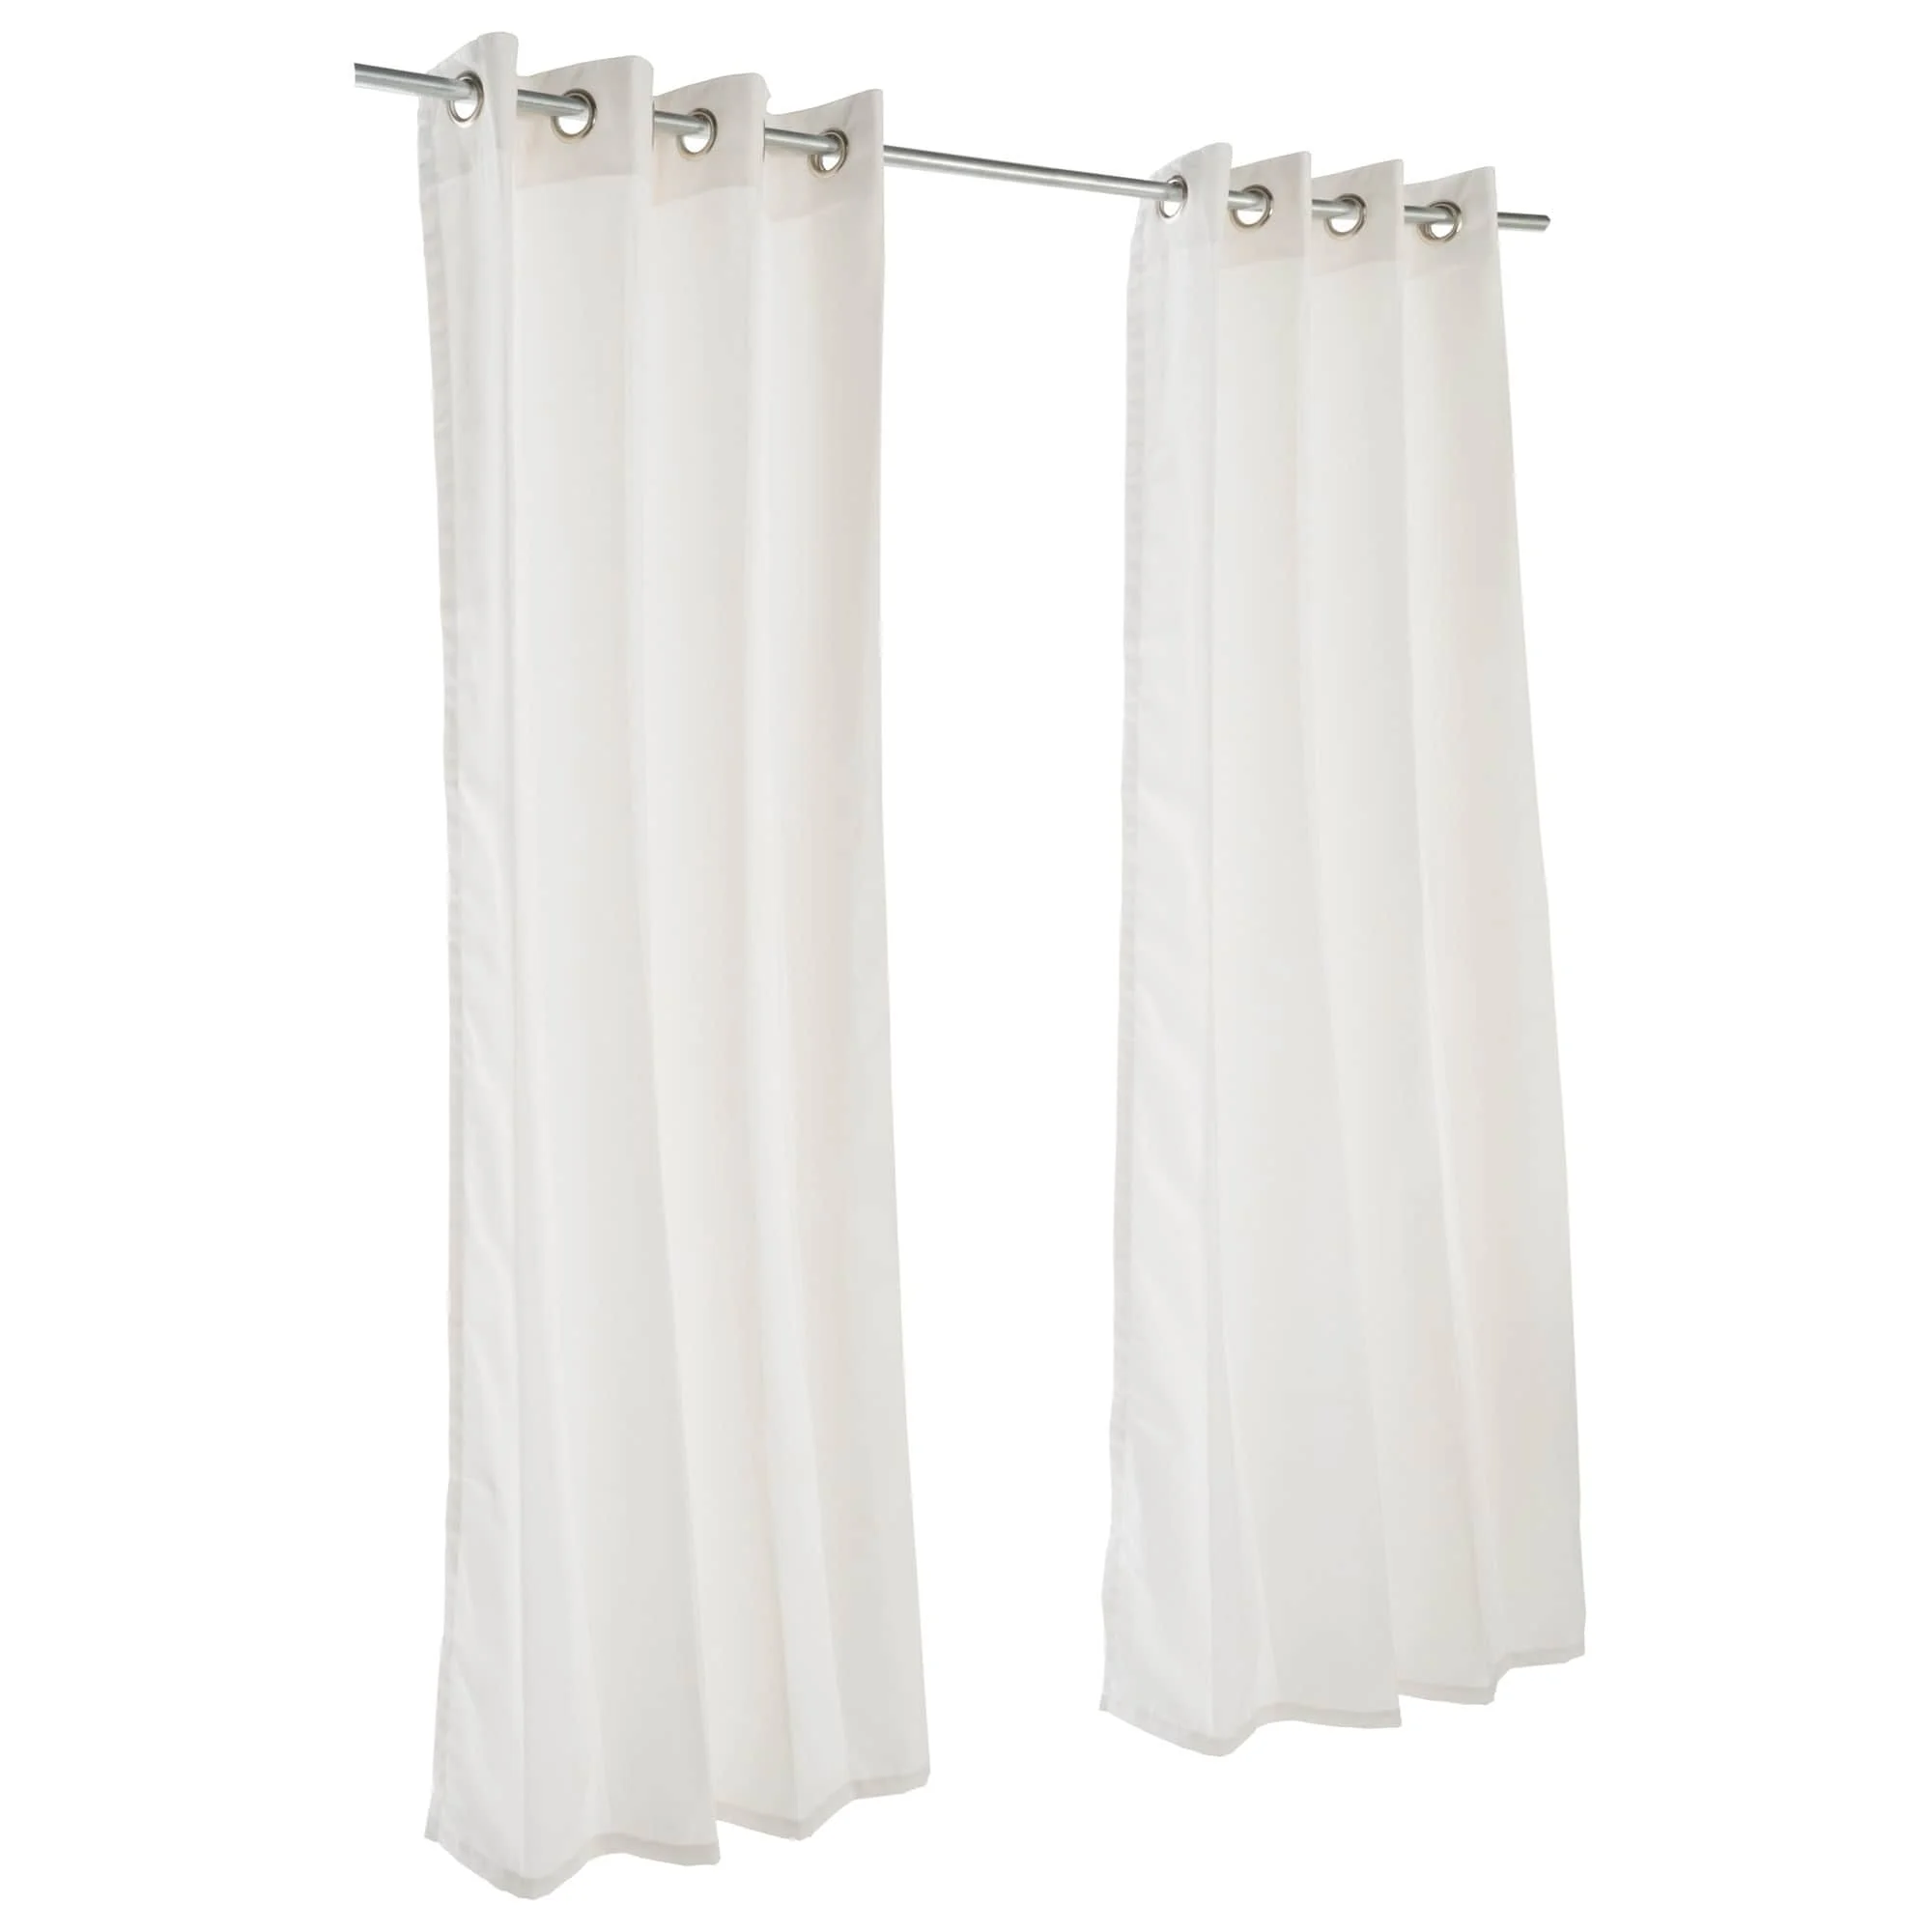 White draped curtains. 